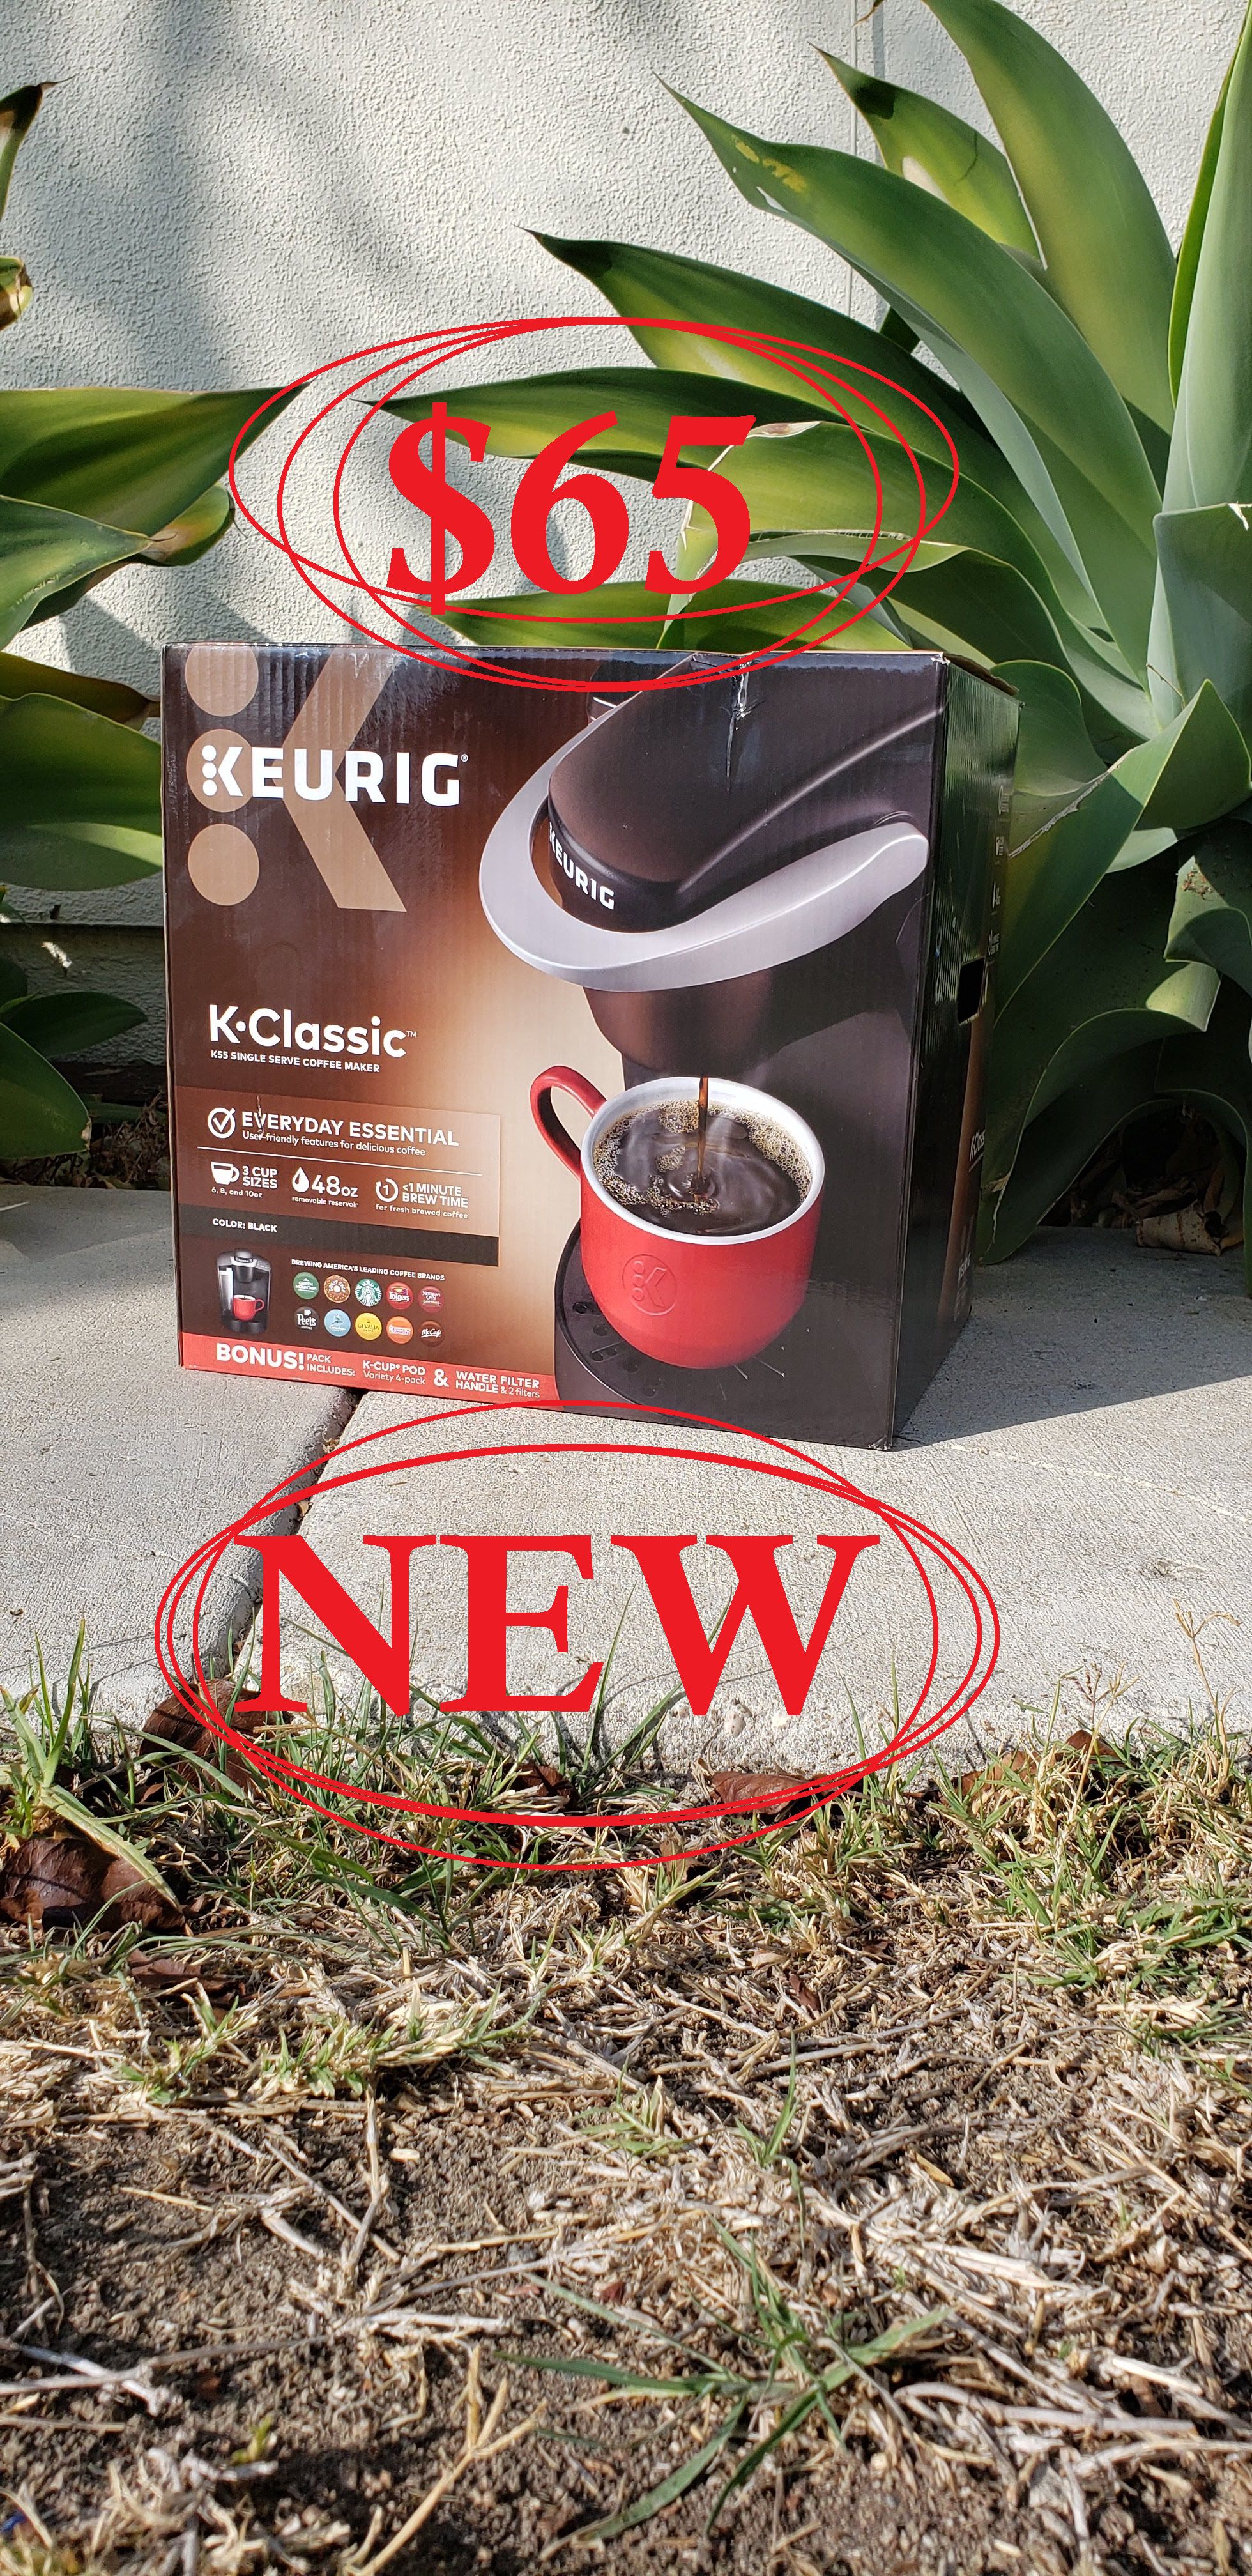 BRAND NEW Keurig K-Classic K55 Coffee maker - BOX NEVER OPENED - GREAT CHRISTMAS GIFT